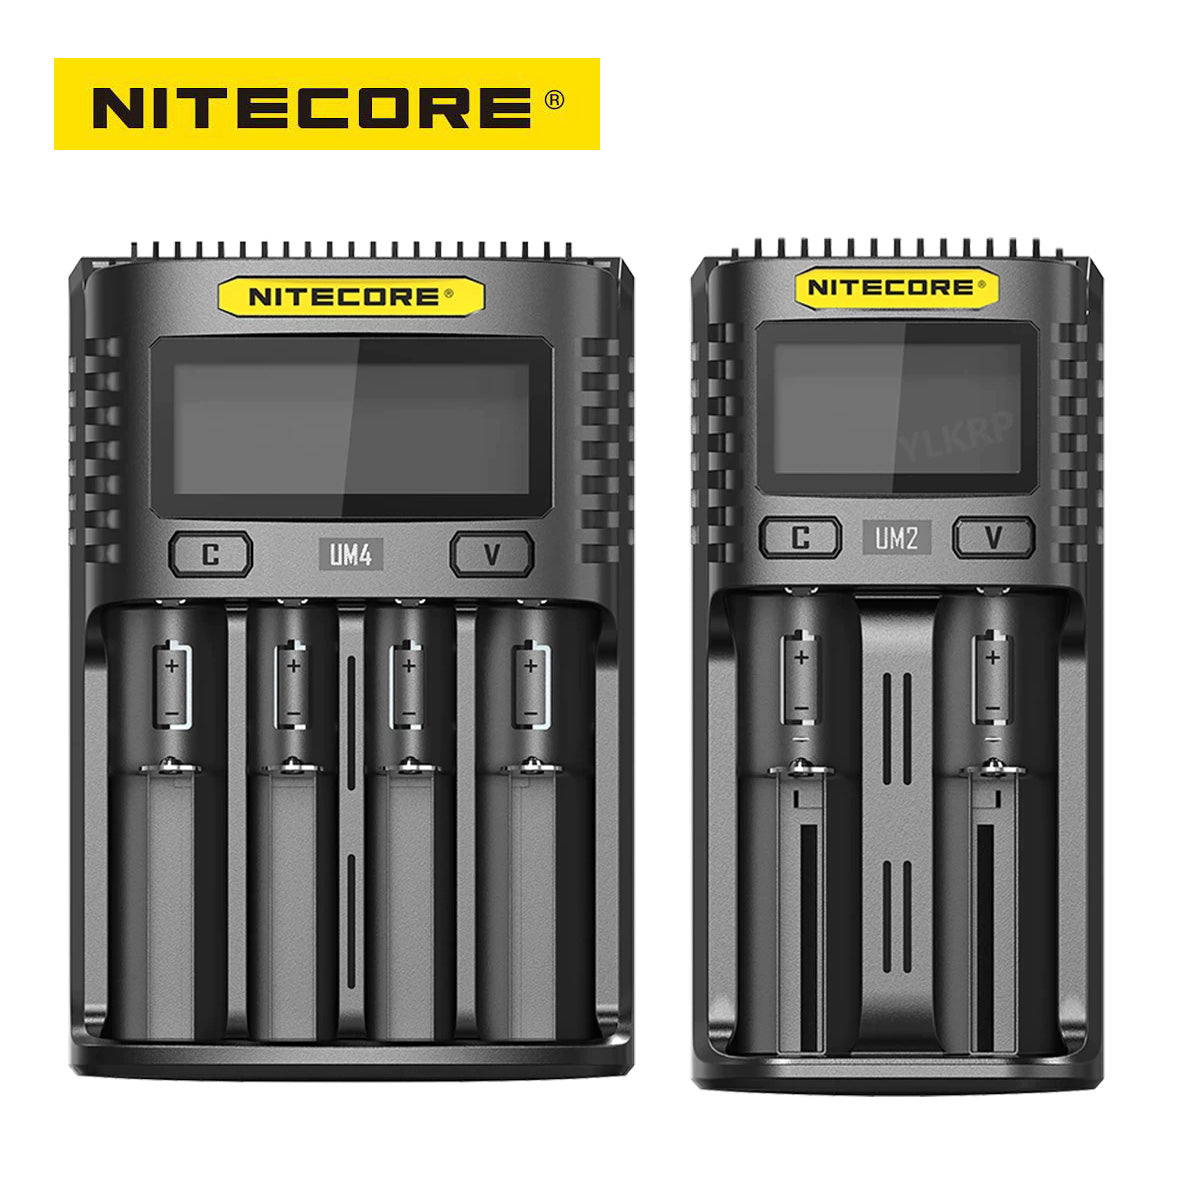 Nitecore - UM2 & UM4 USB QC Battery Charger